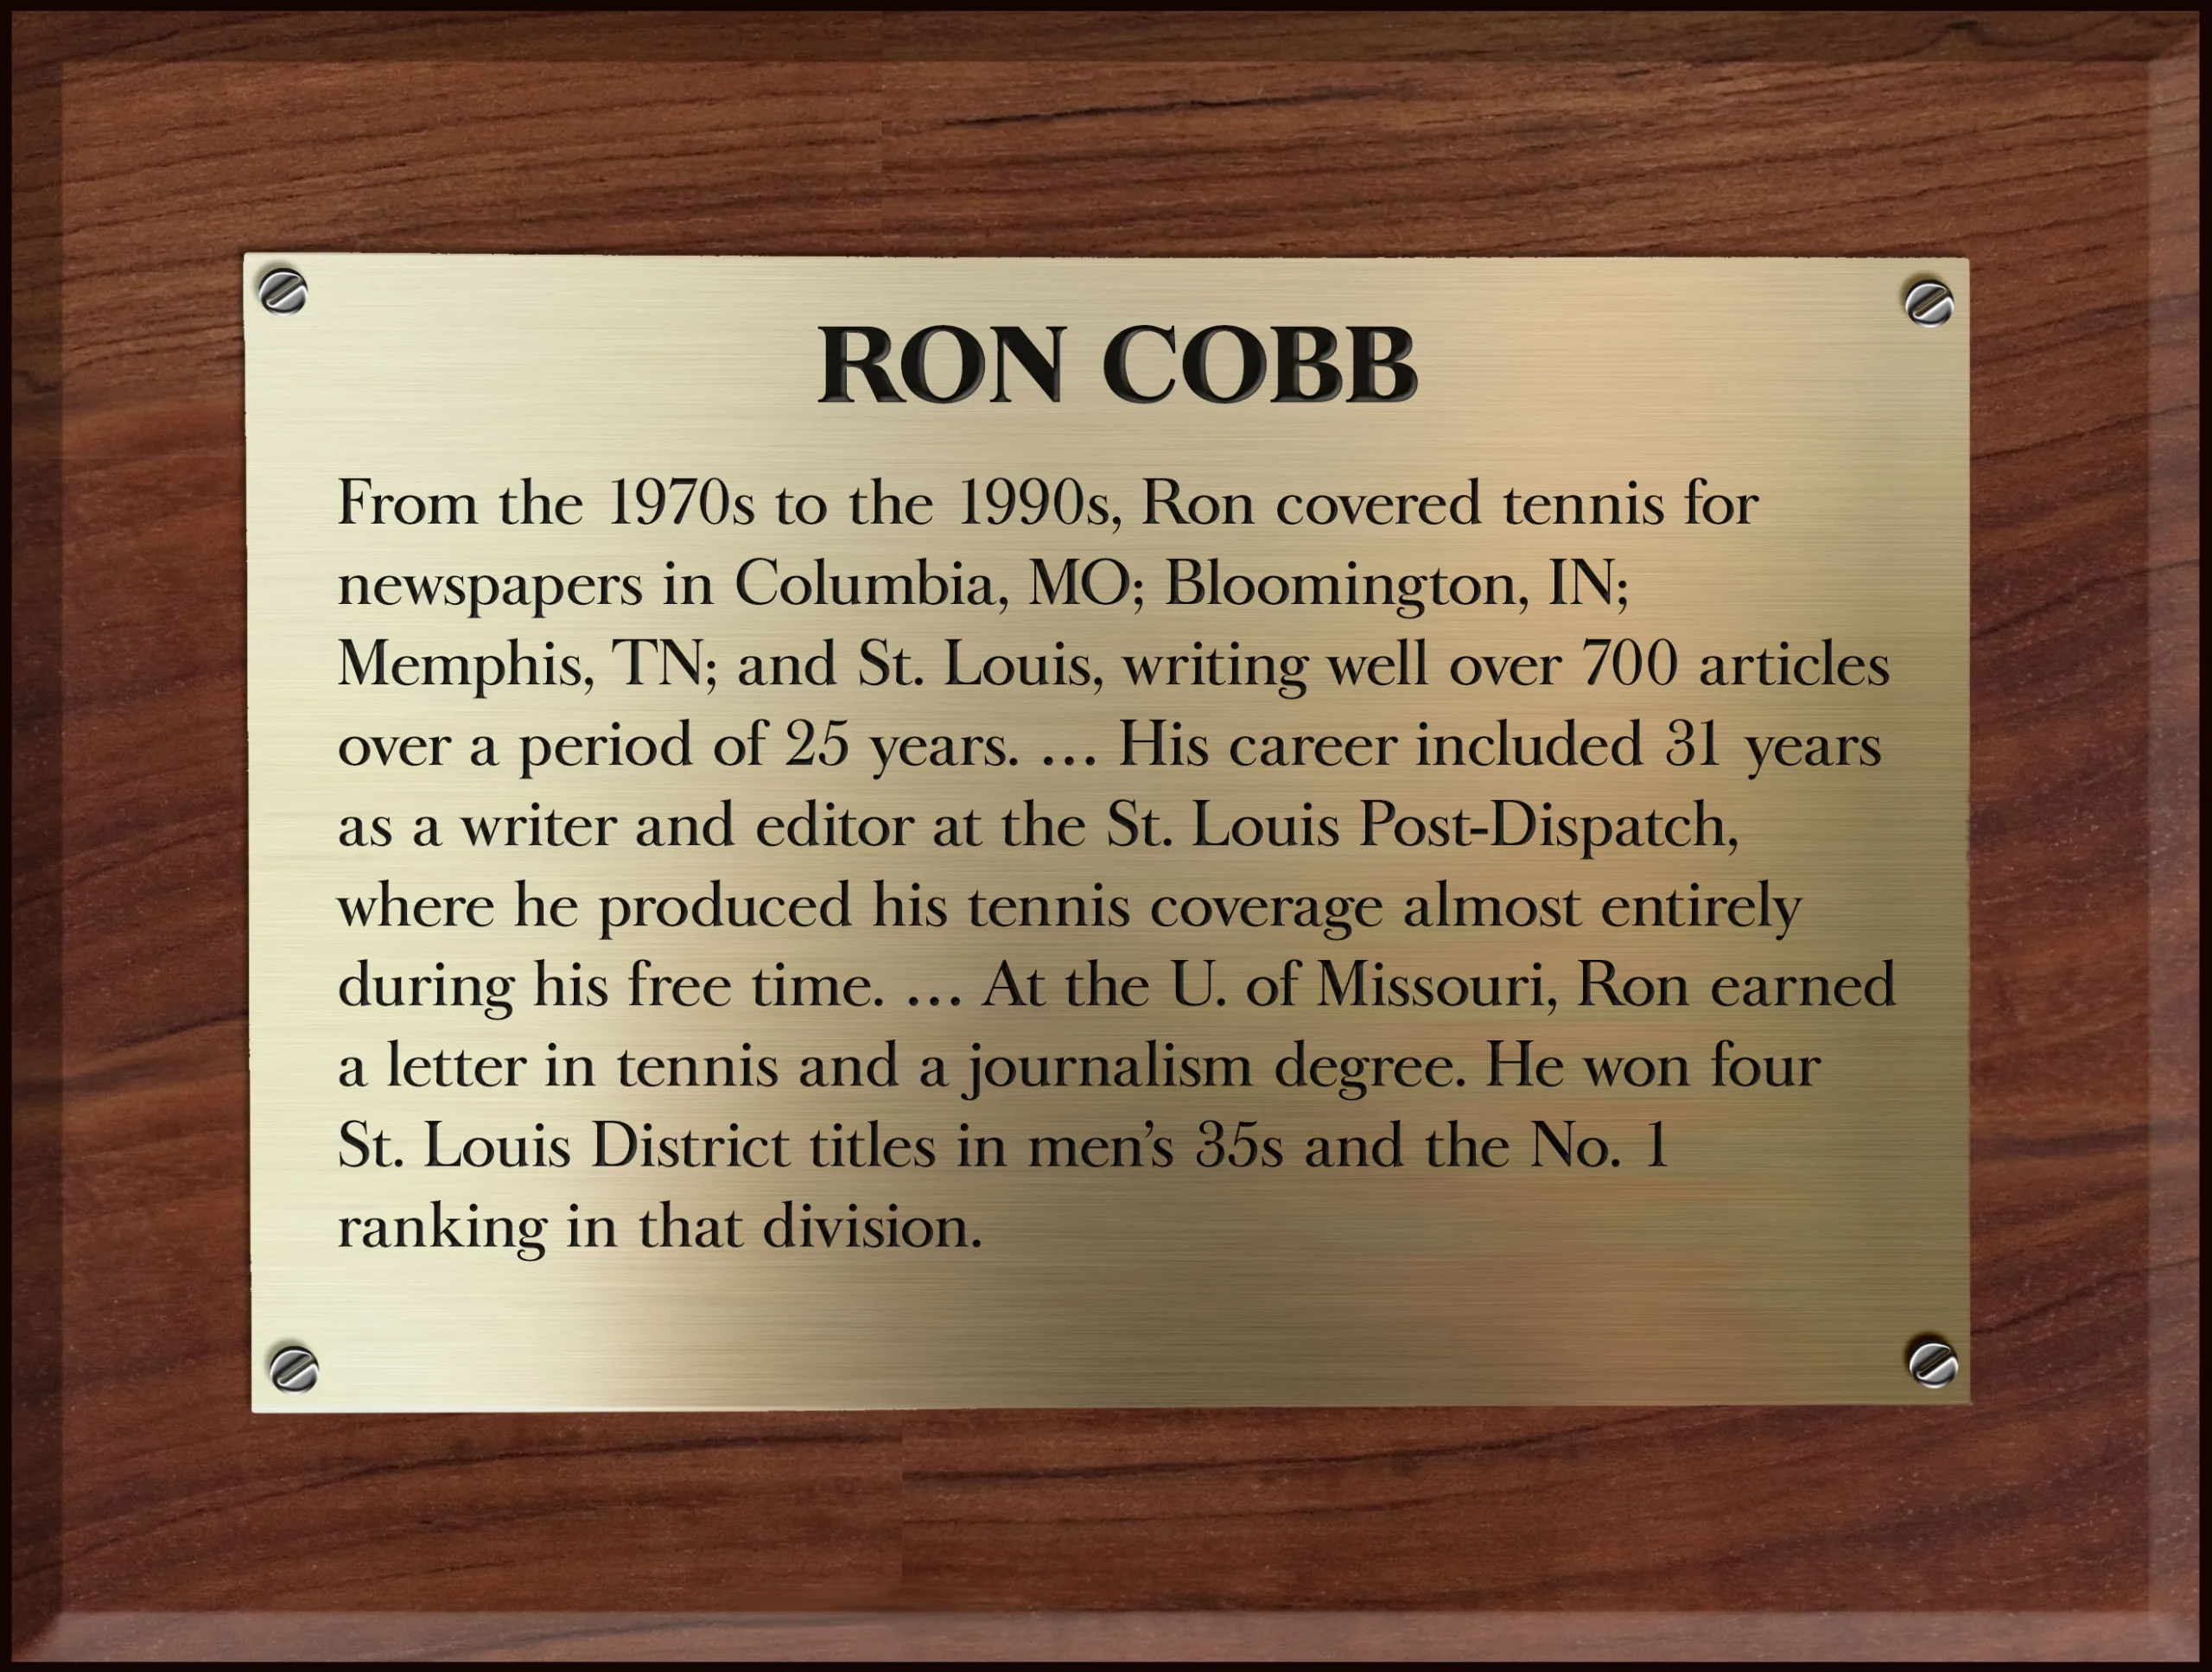 Ron Cobb